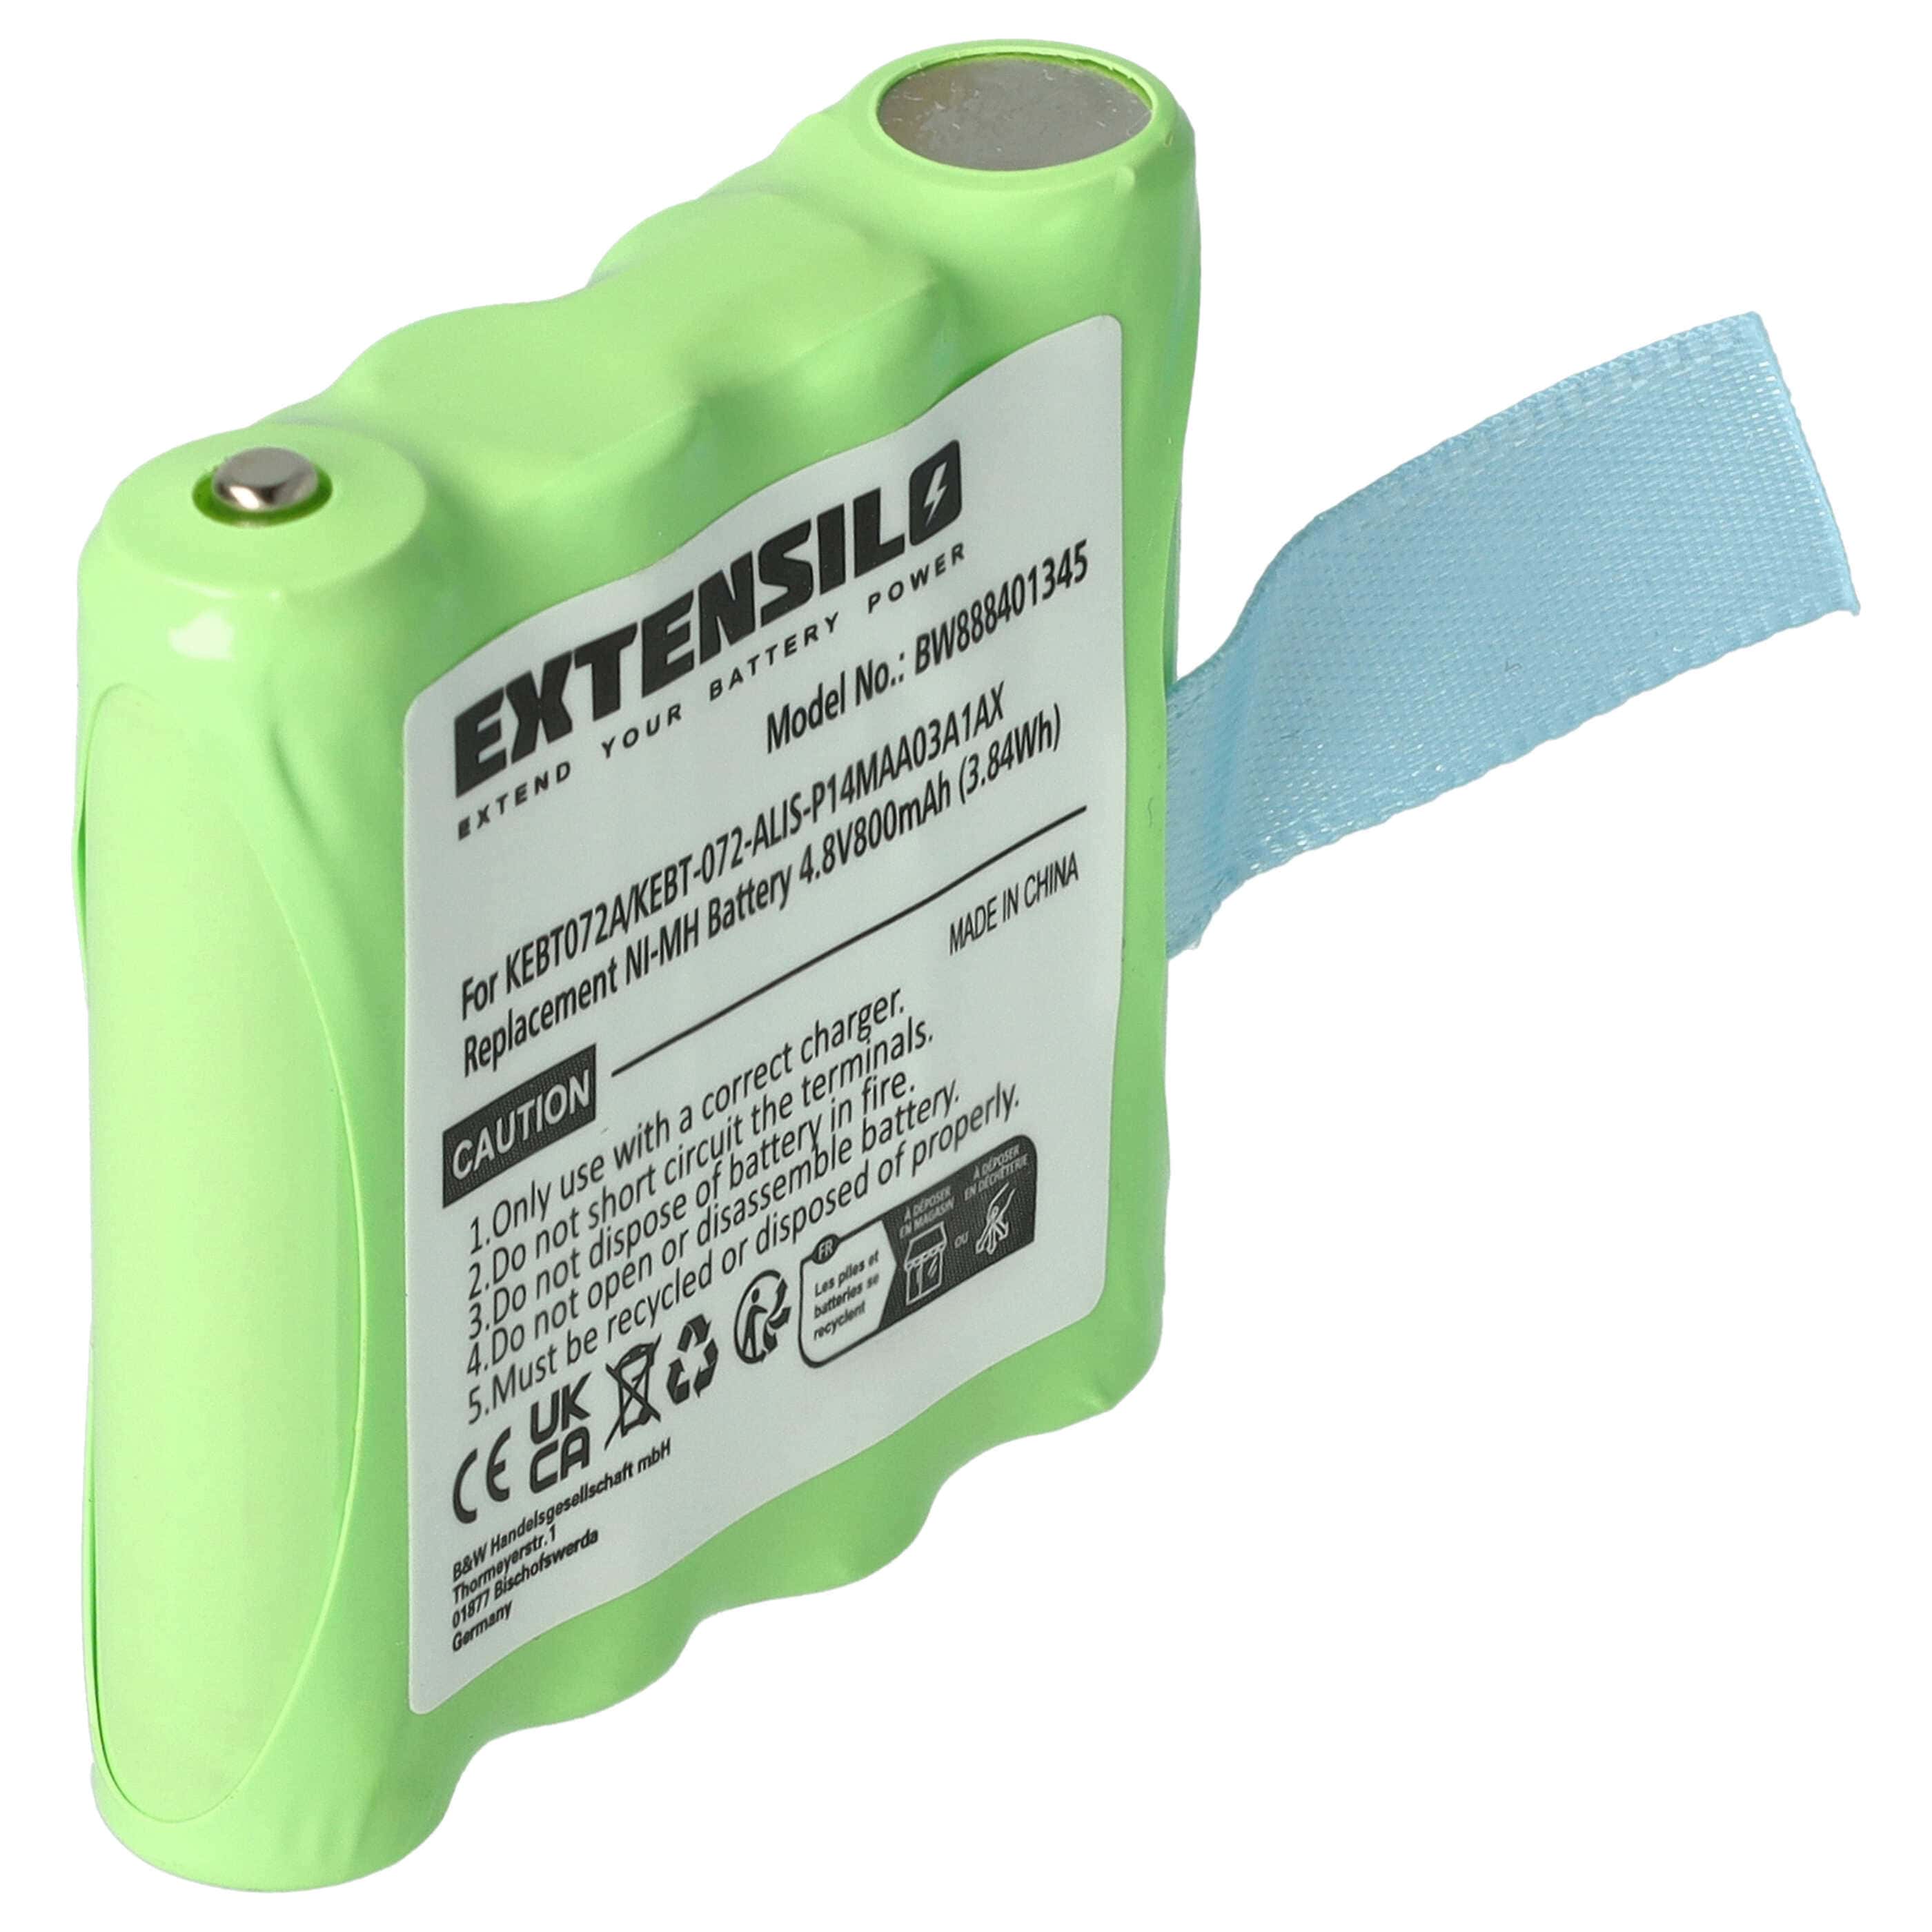 Batterie remplace Midland KEBT072A, BATT4R, BATT-4R, KEBT-072-A pour radio talkie-walkie - 800mAh 4,8V NiMH